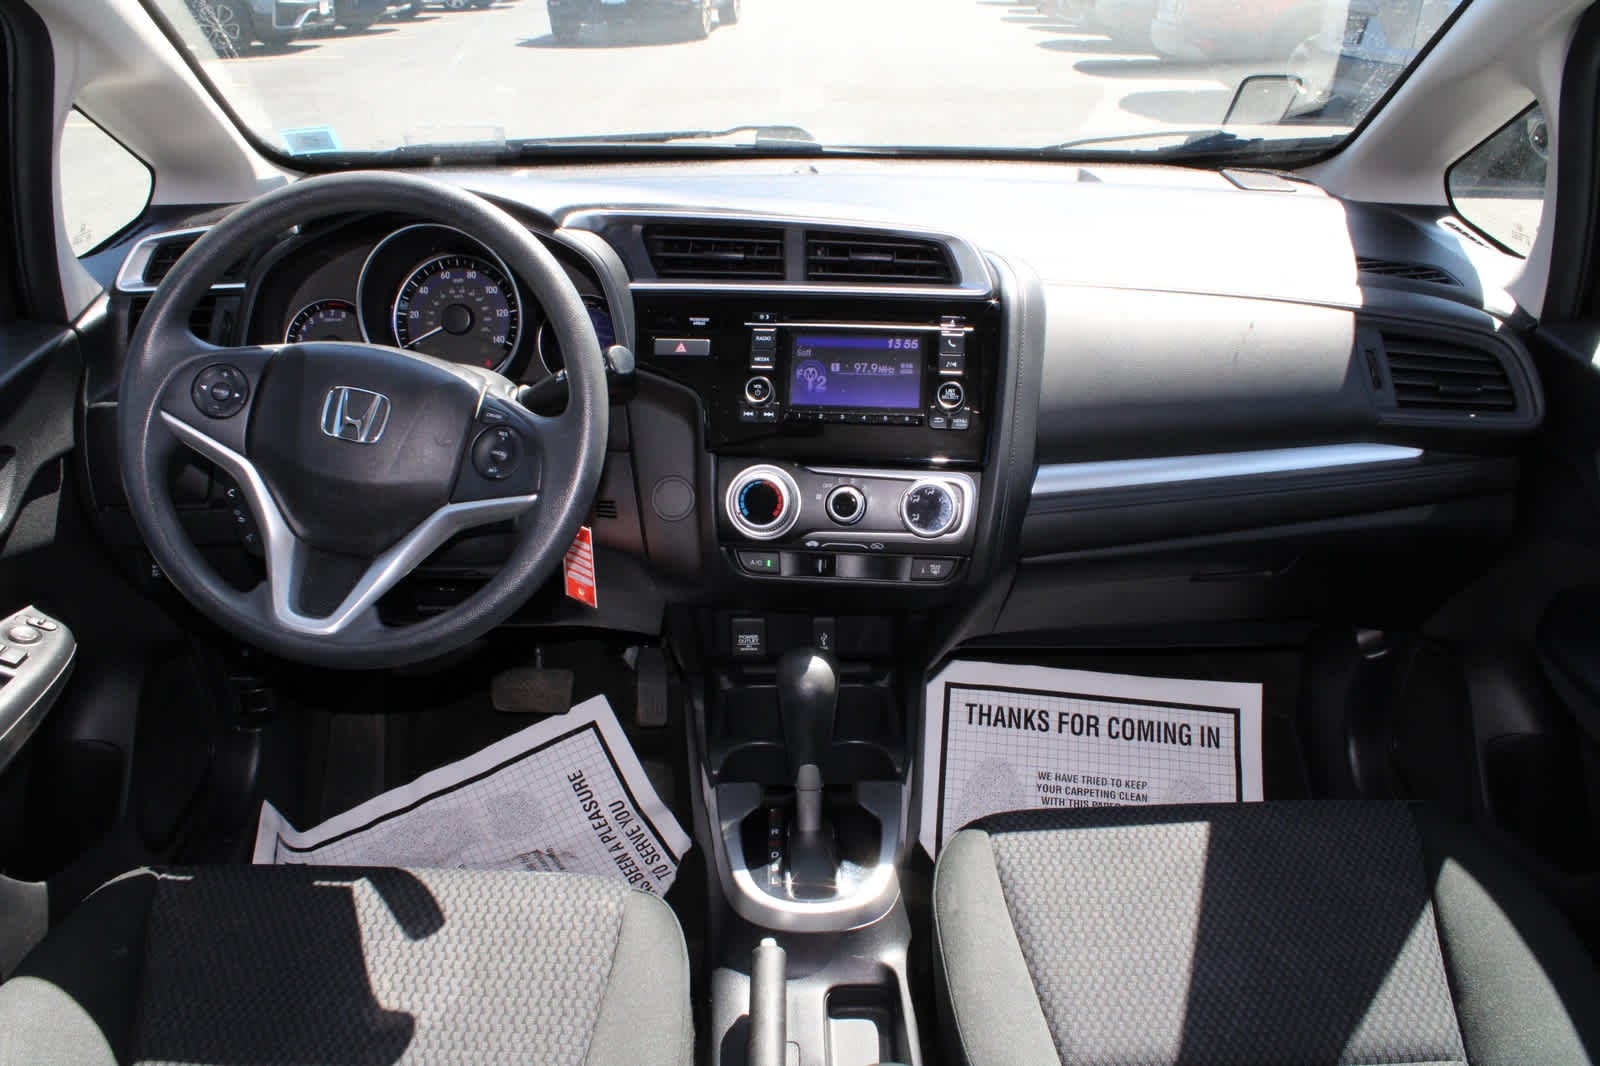 2020 Honda Fit LX CVT